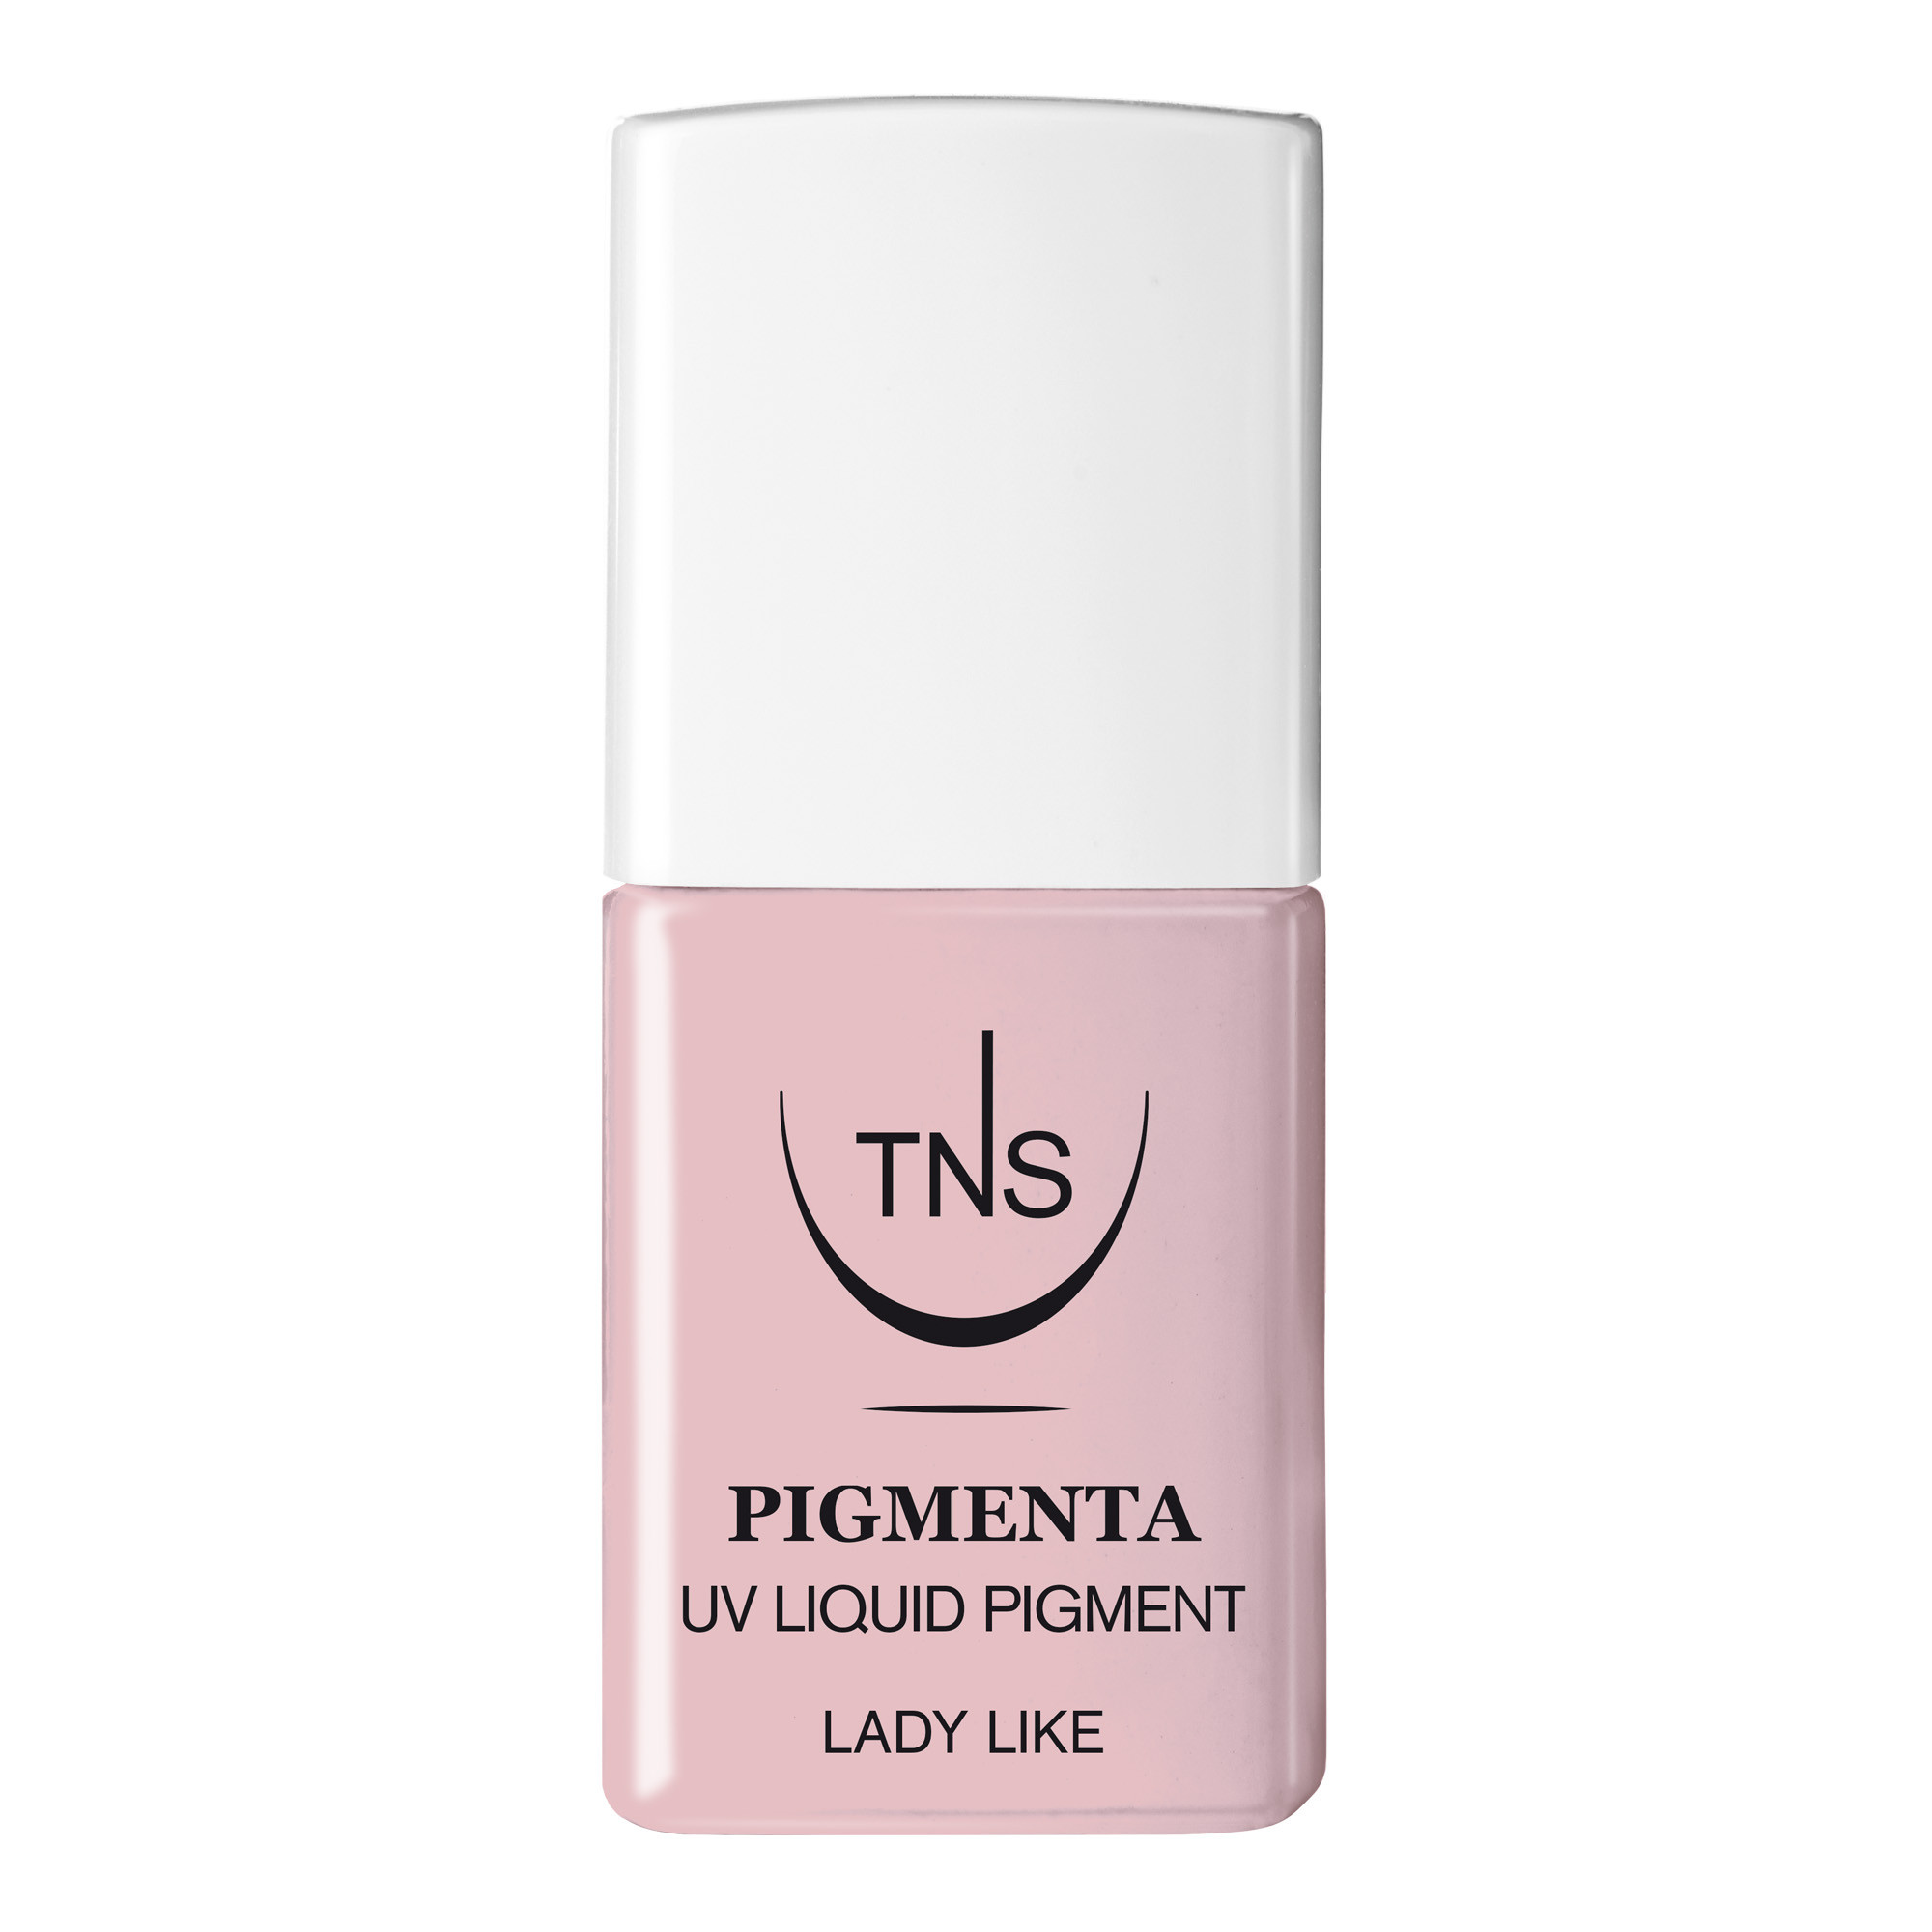 UV Liquid Pigment Lady Like powder pink 10 ml Pigmenta TNS